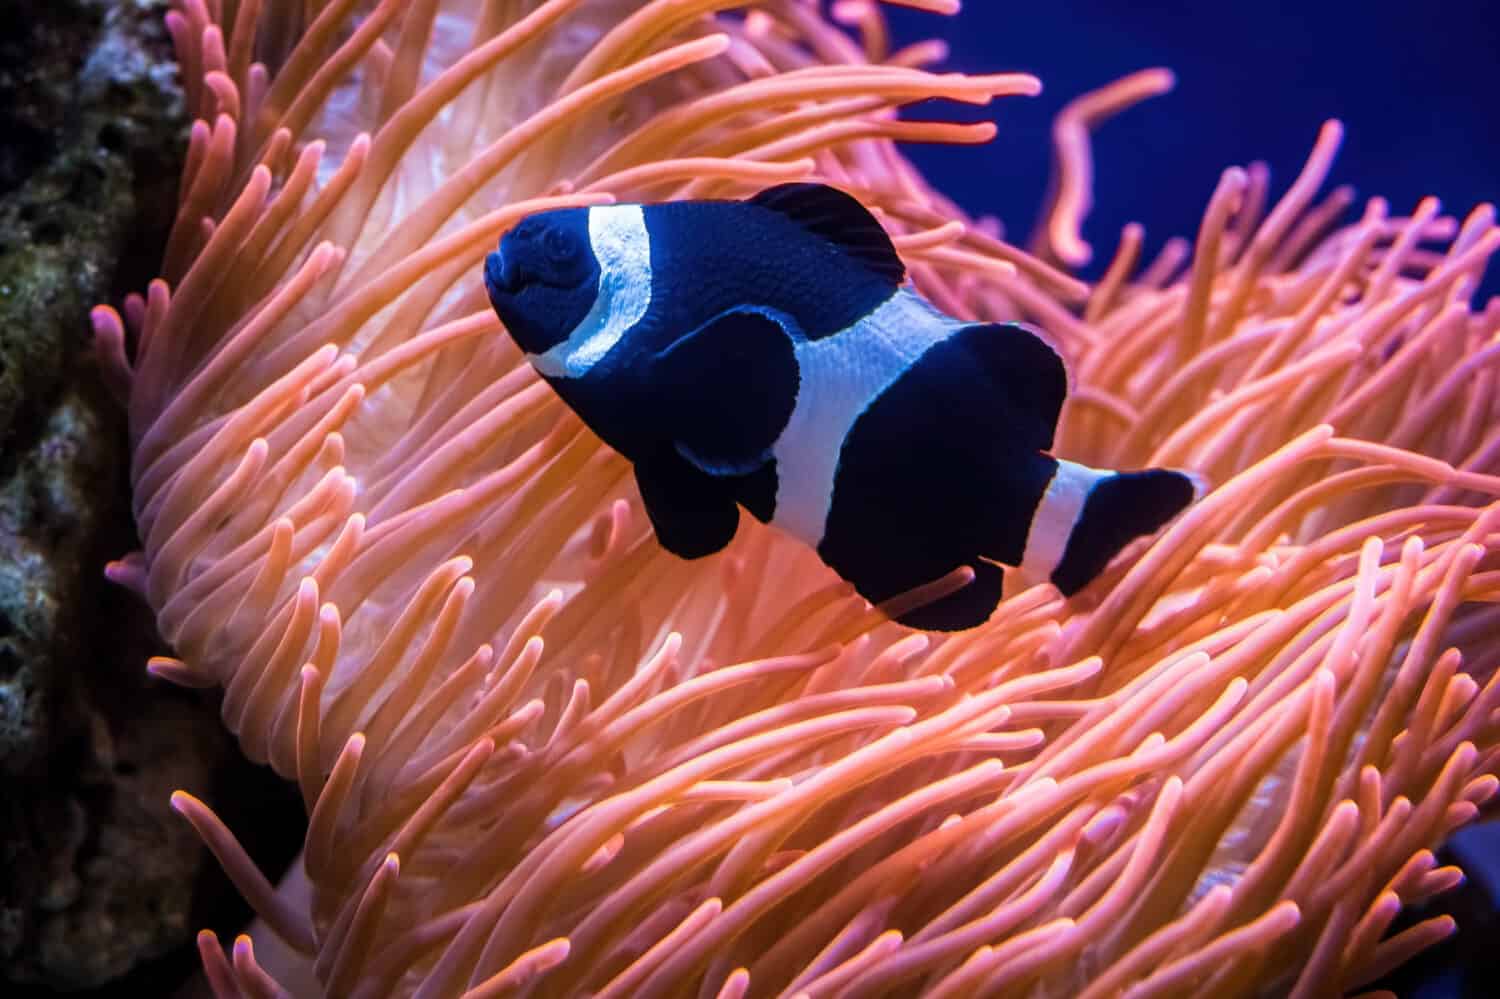 Black and white clownfish